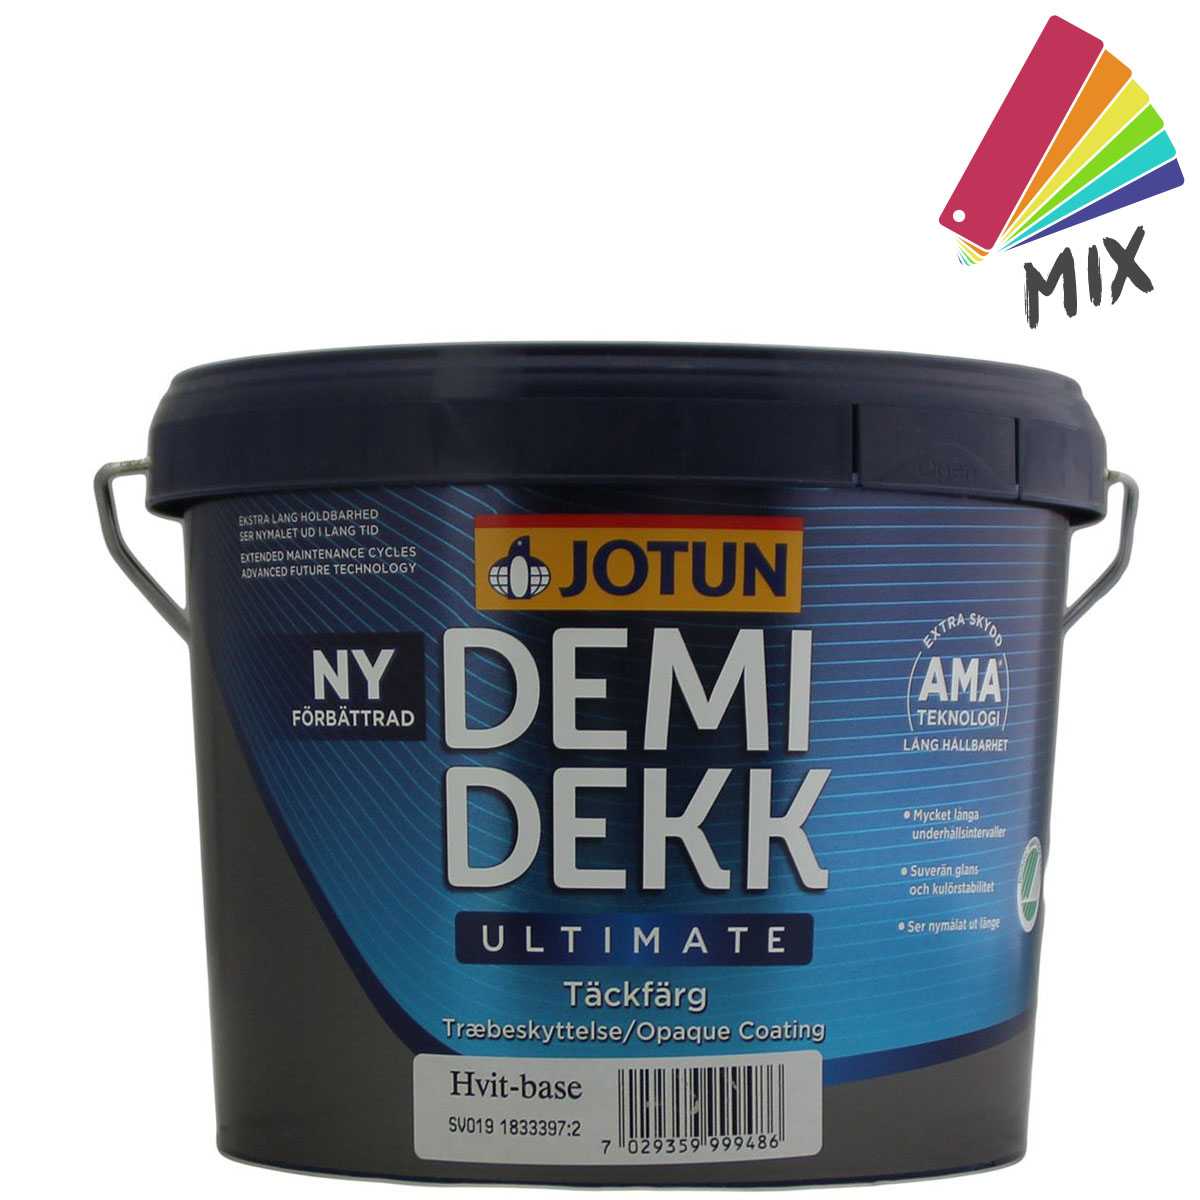 Jotun Demidekk Ultimate TÄCKFÄRG 3L wunschfarbton, Deckfarbe